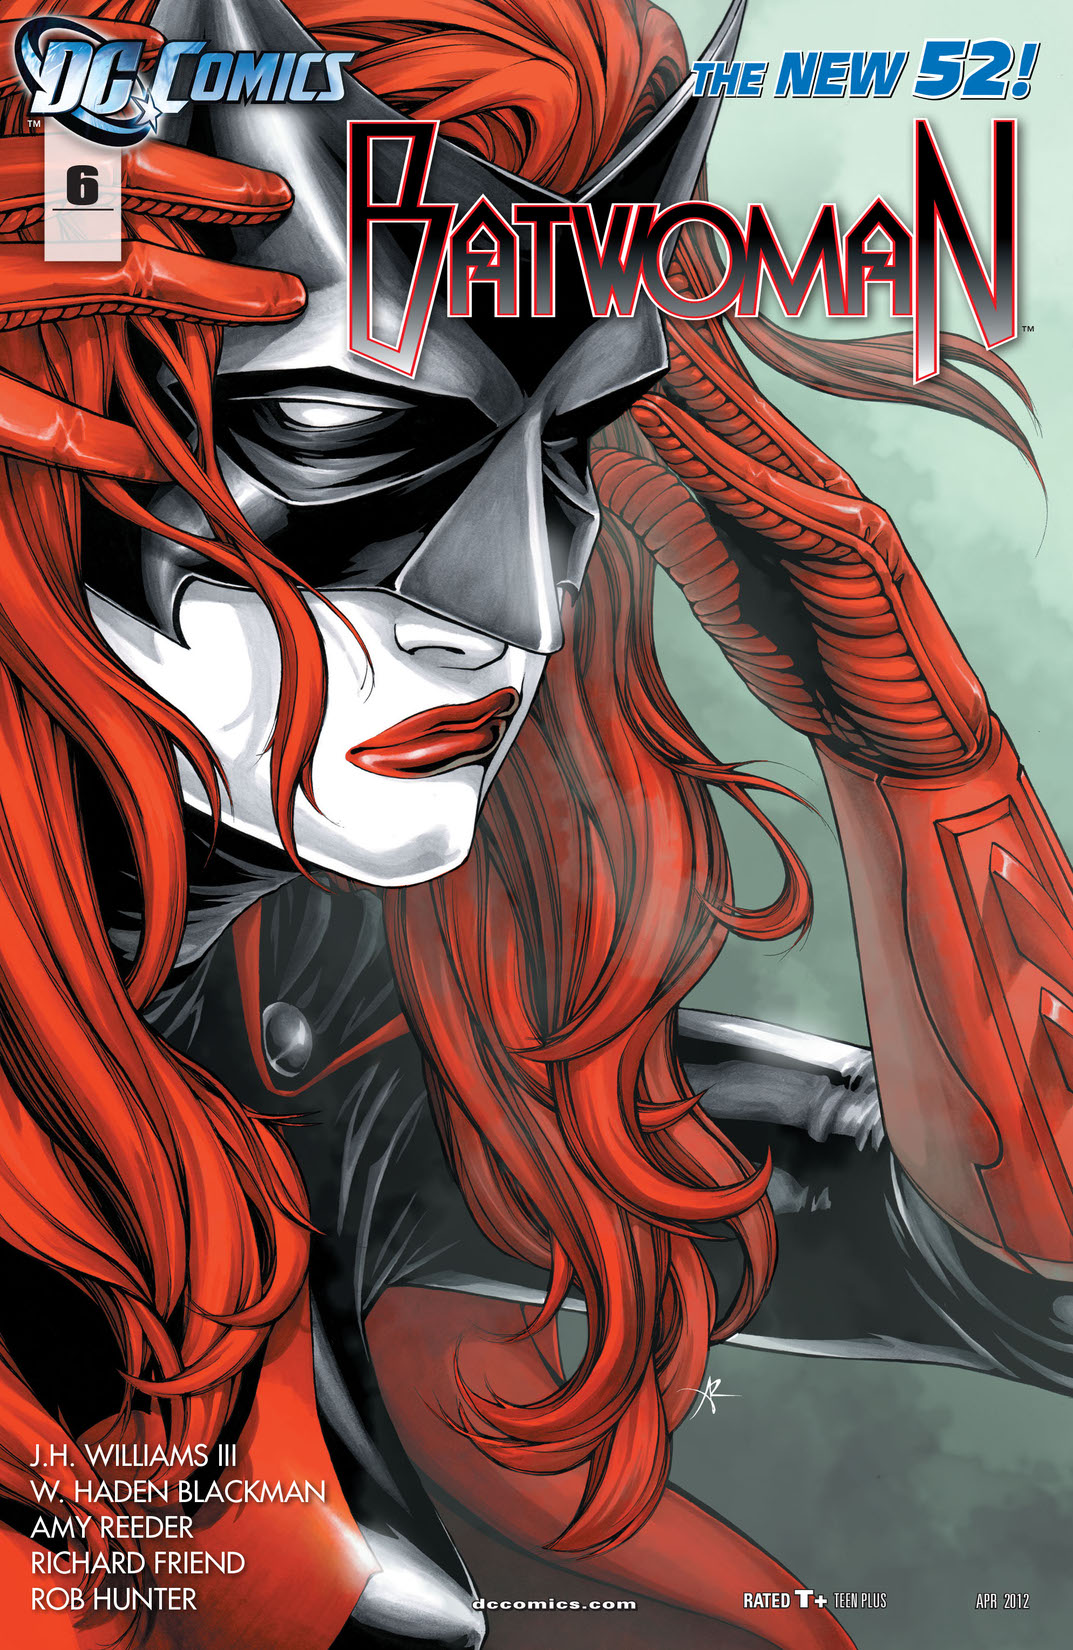 Batwoman (2011-) #6 preview images